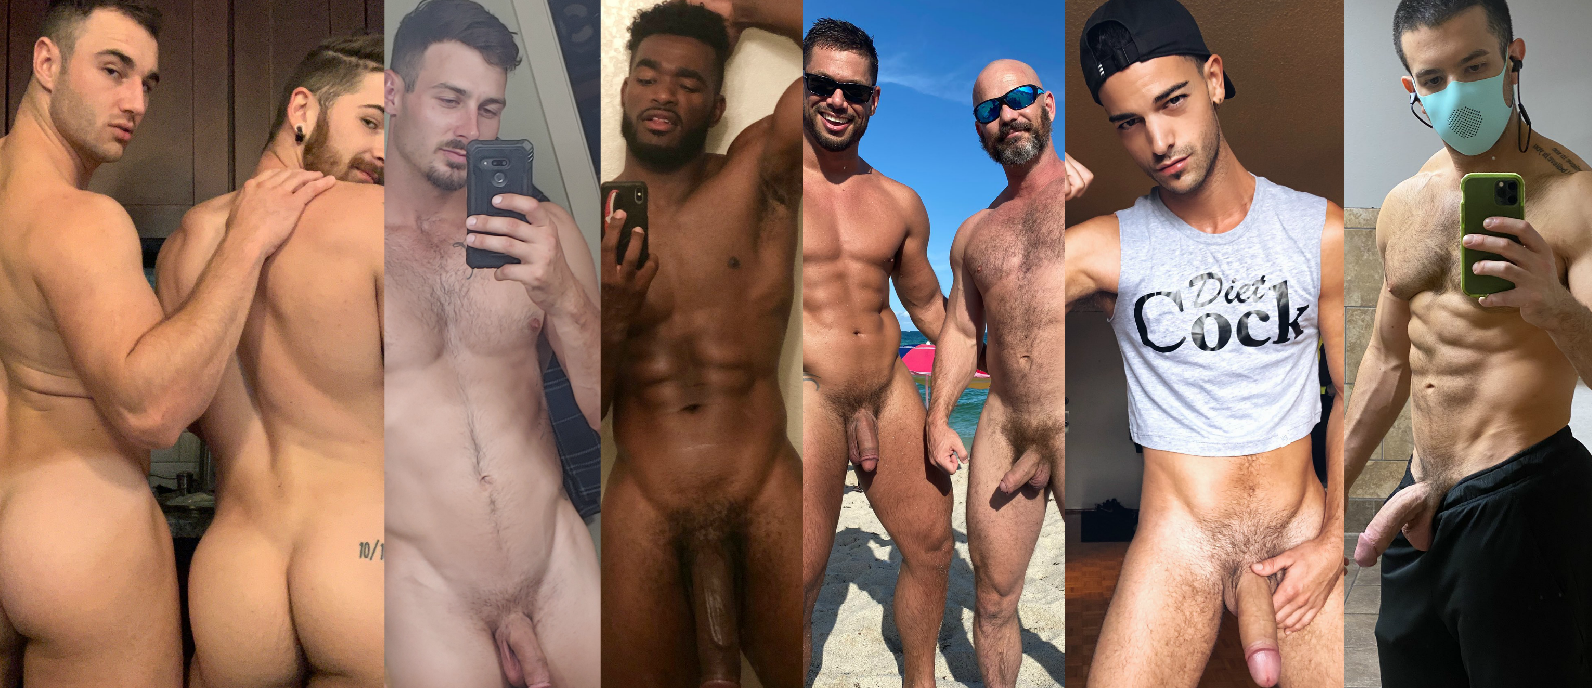 best gay porn sites tumblr